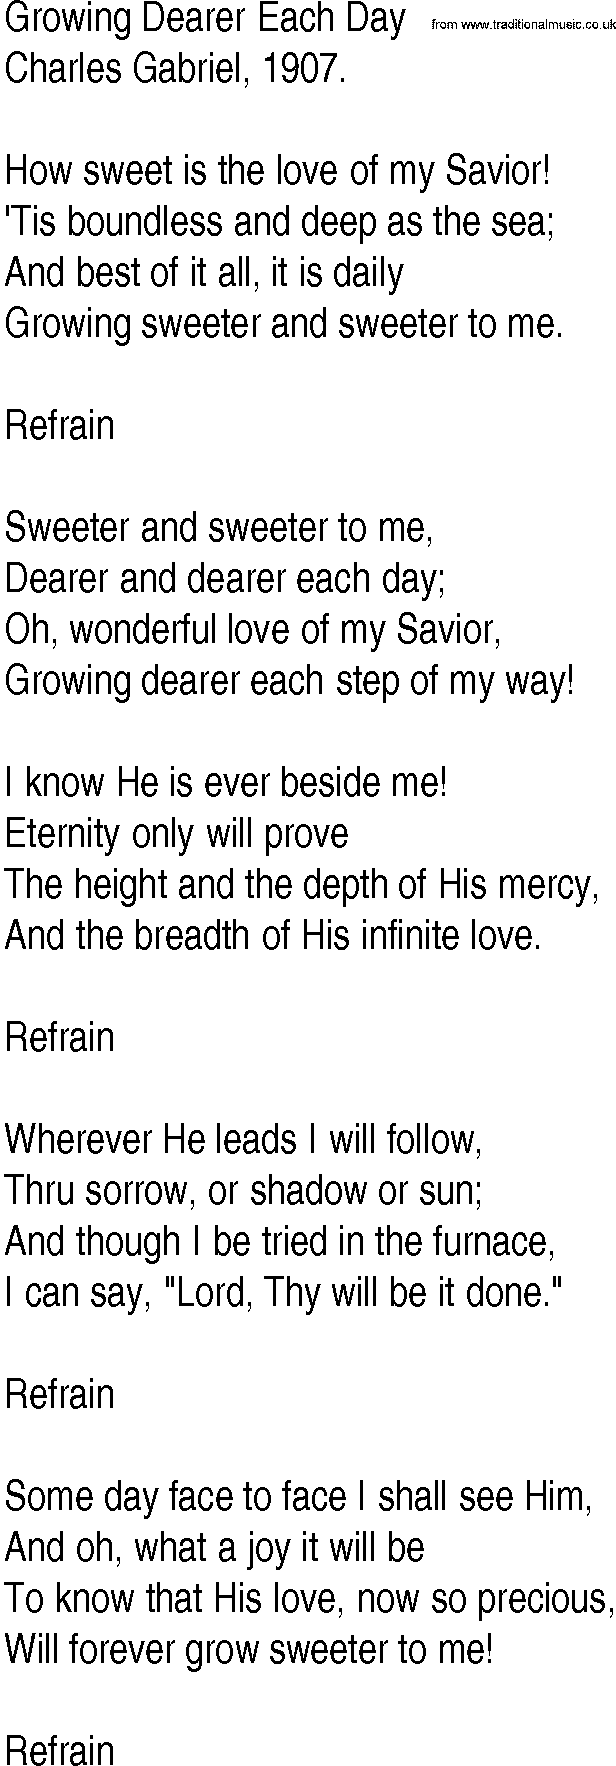 Hymn and Gospel Song: Growing Dearer Each Day by Charles Gabriel lyrics